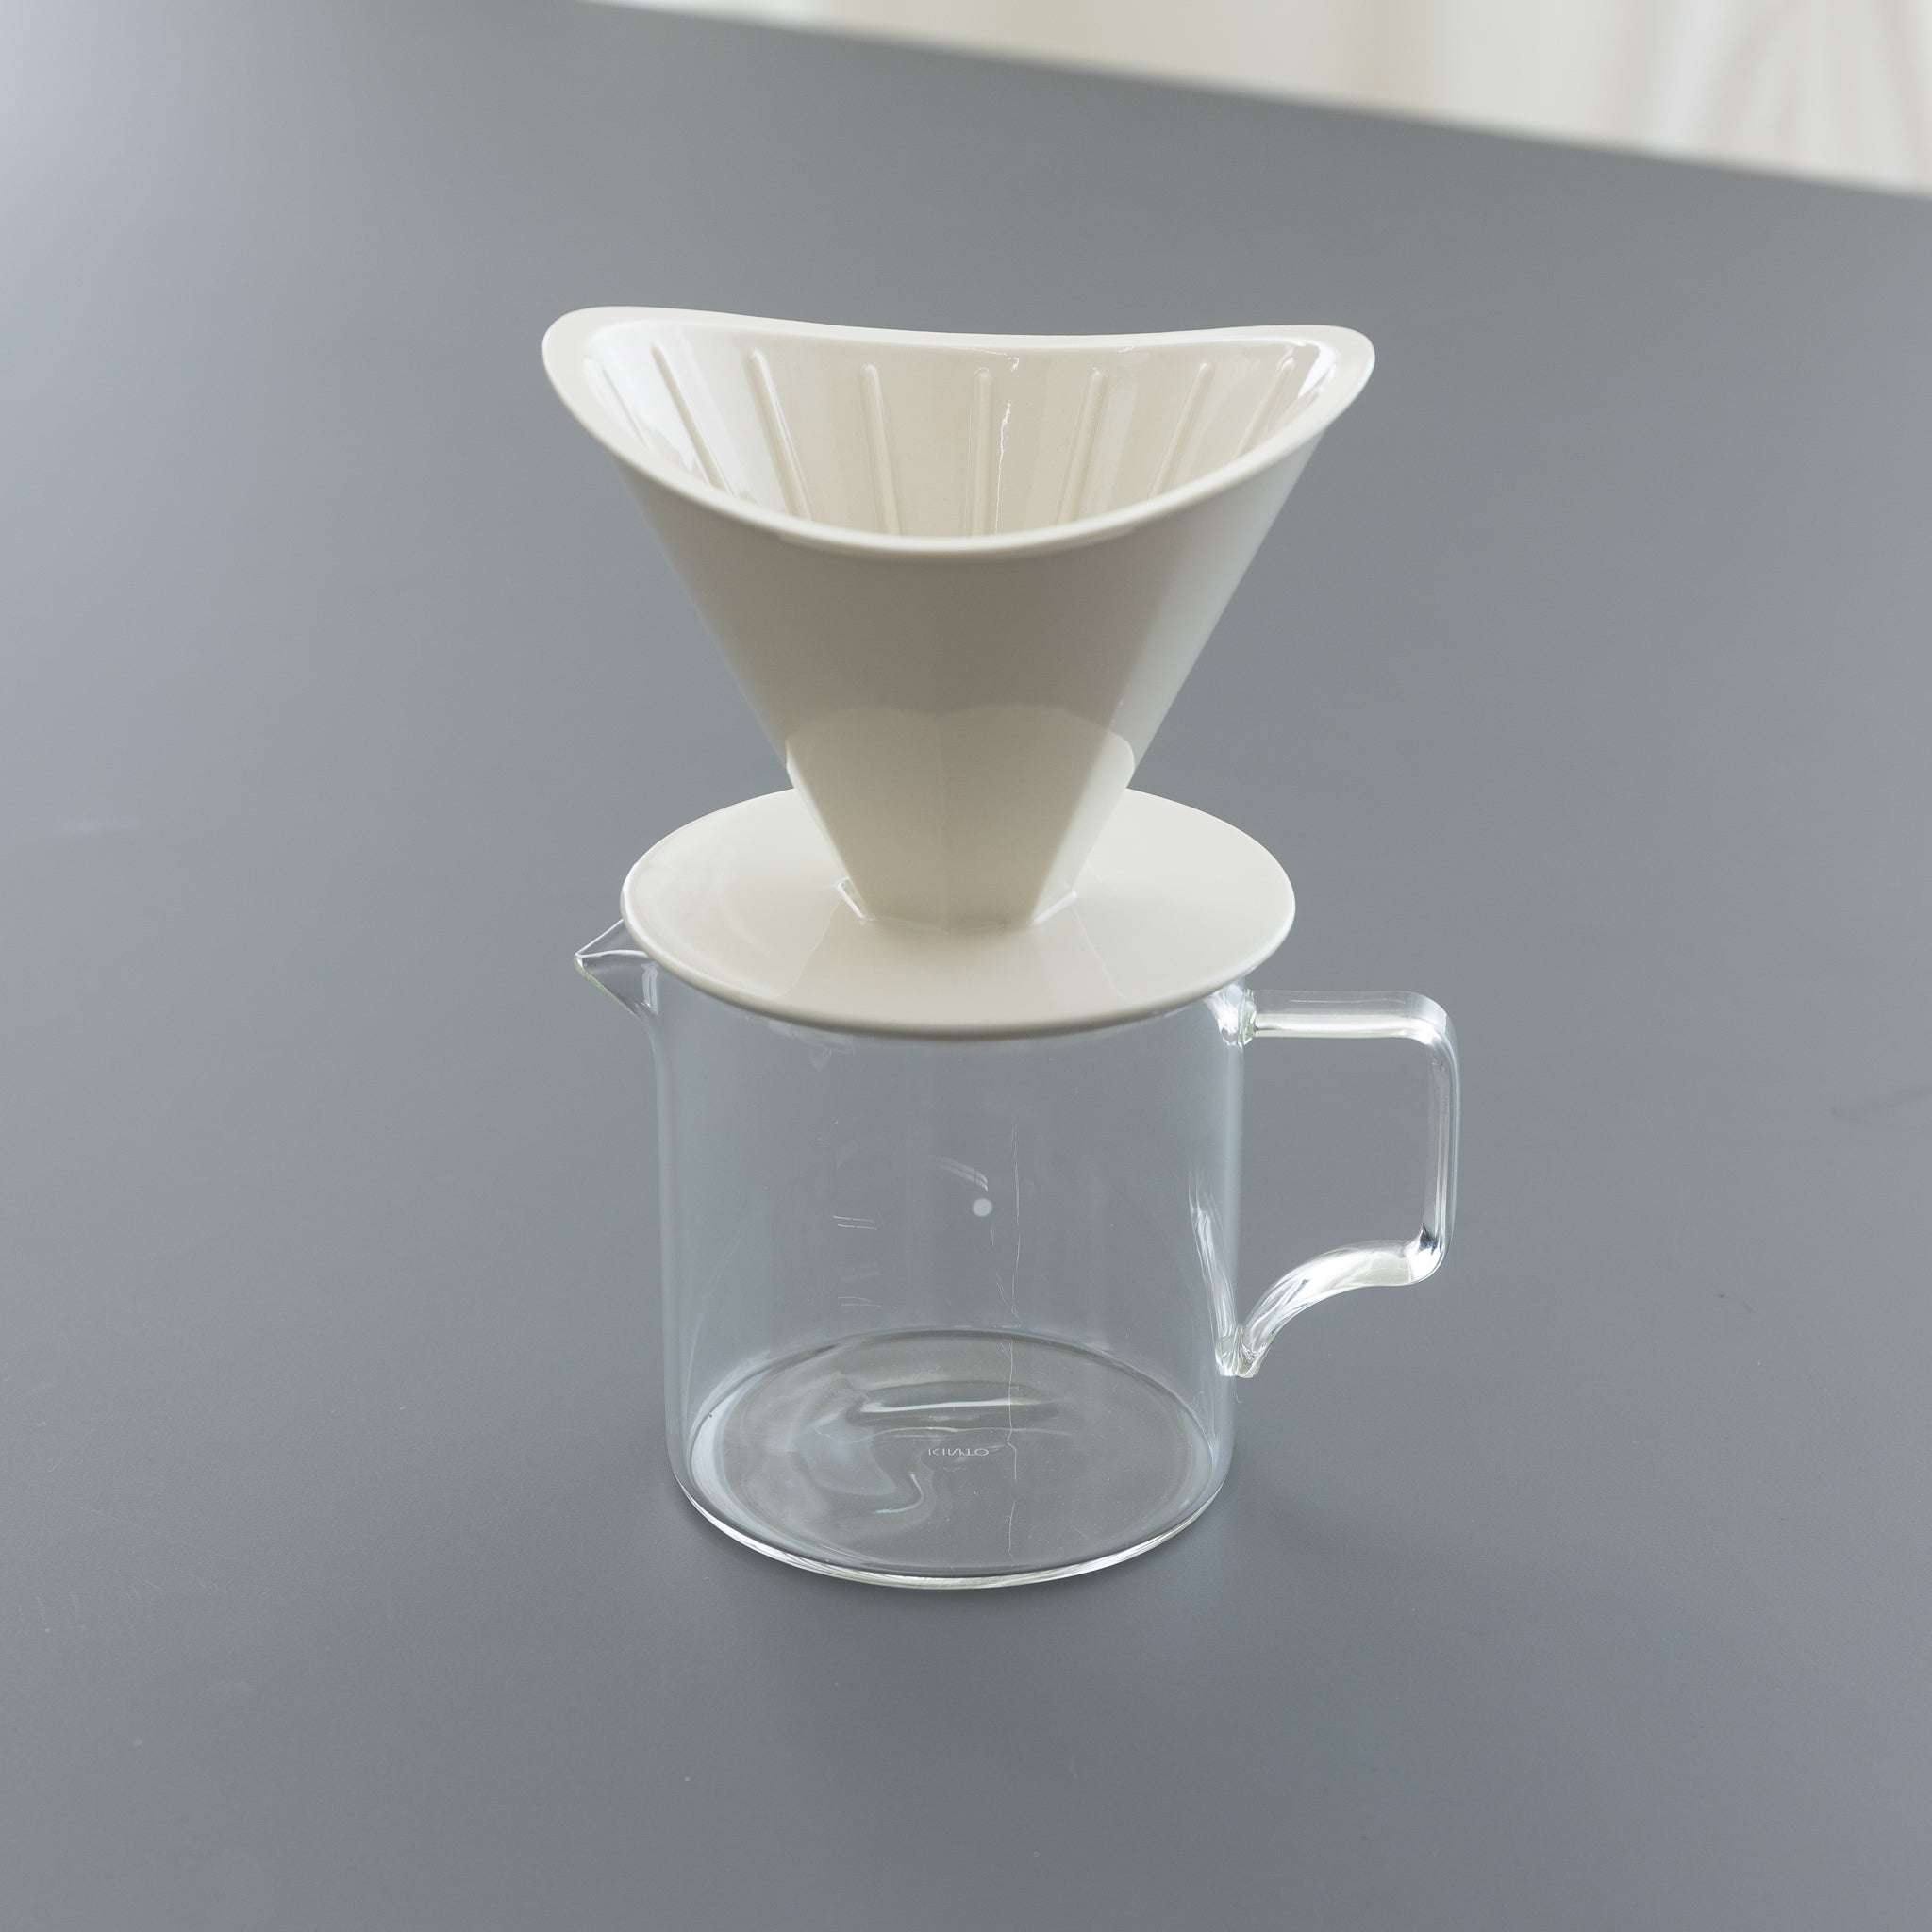 KINTO OCT Coffee Jug - 2 Cups